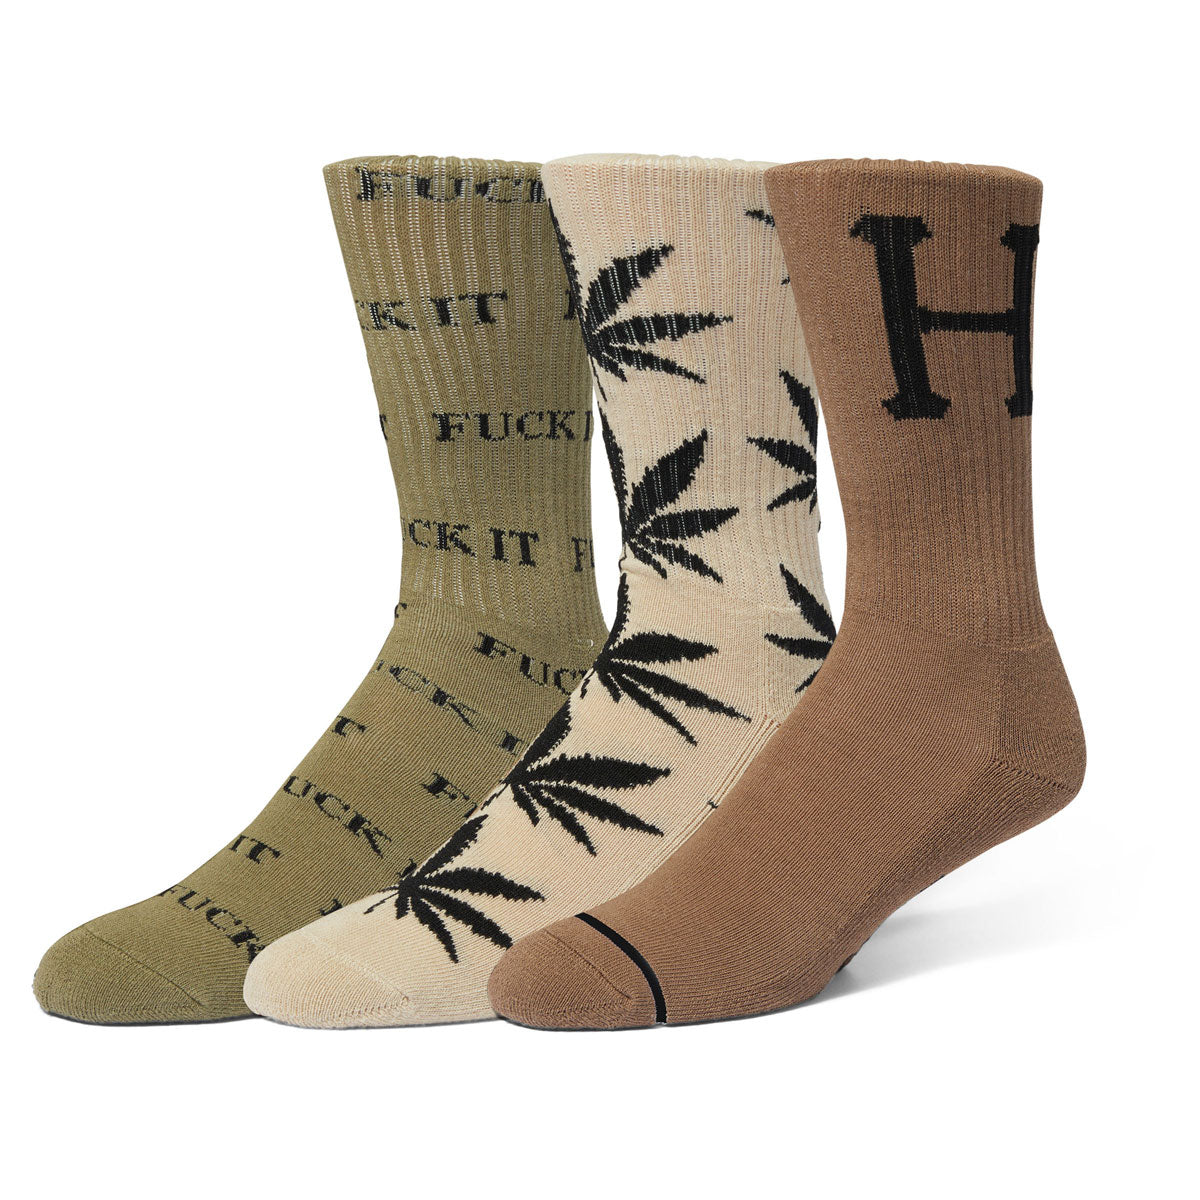 HUF Variety 3 Pack of Socks - Cream/Olive/Brown image 1